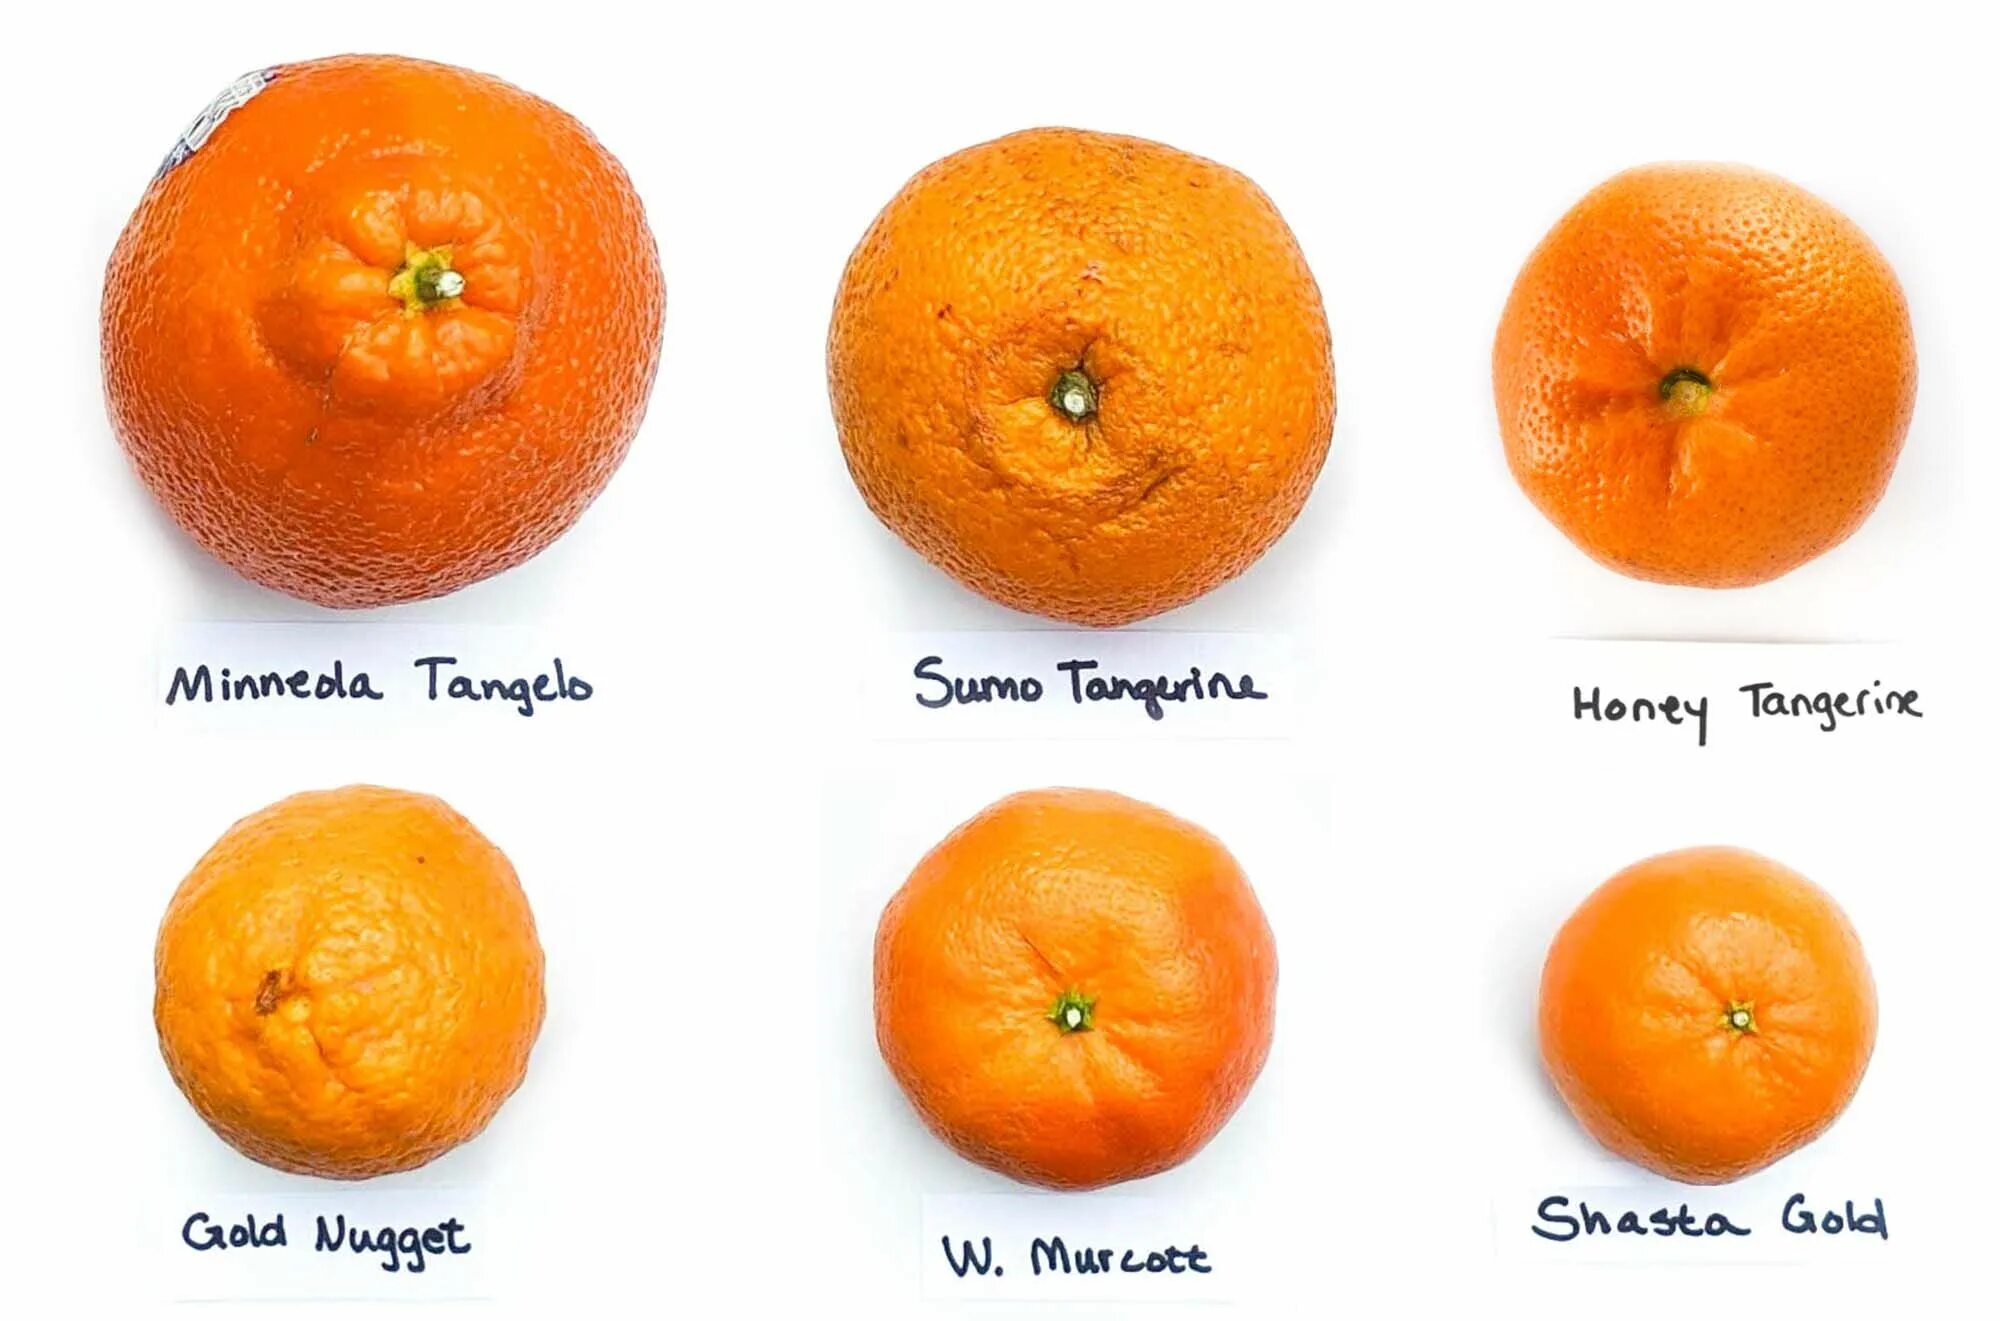 Средний размер мандарина. Мандарин Танжерин. Мандарин сорта Танжерин. Сорт Сацума мандарины.